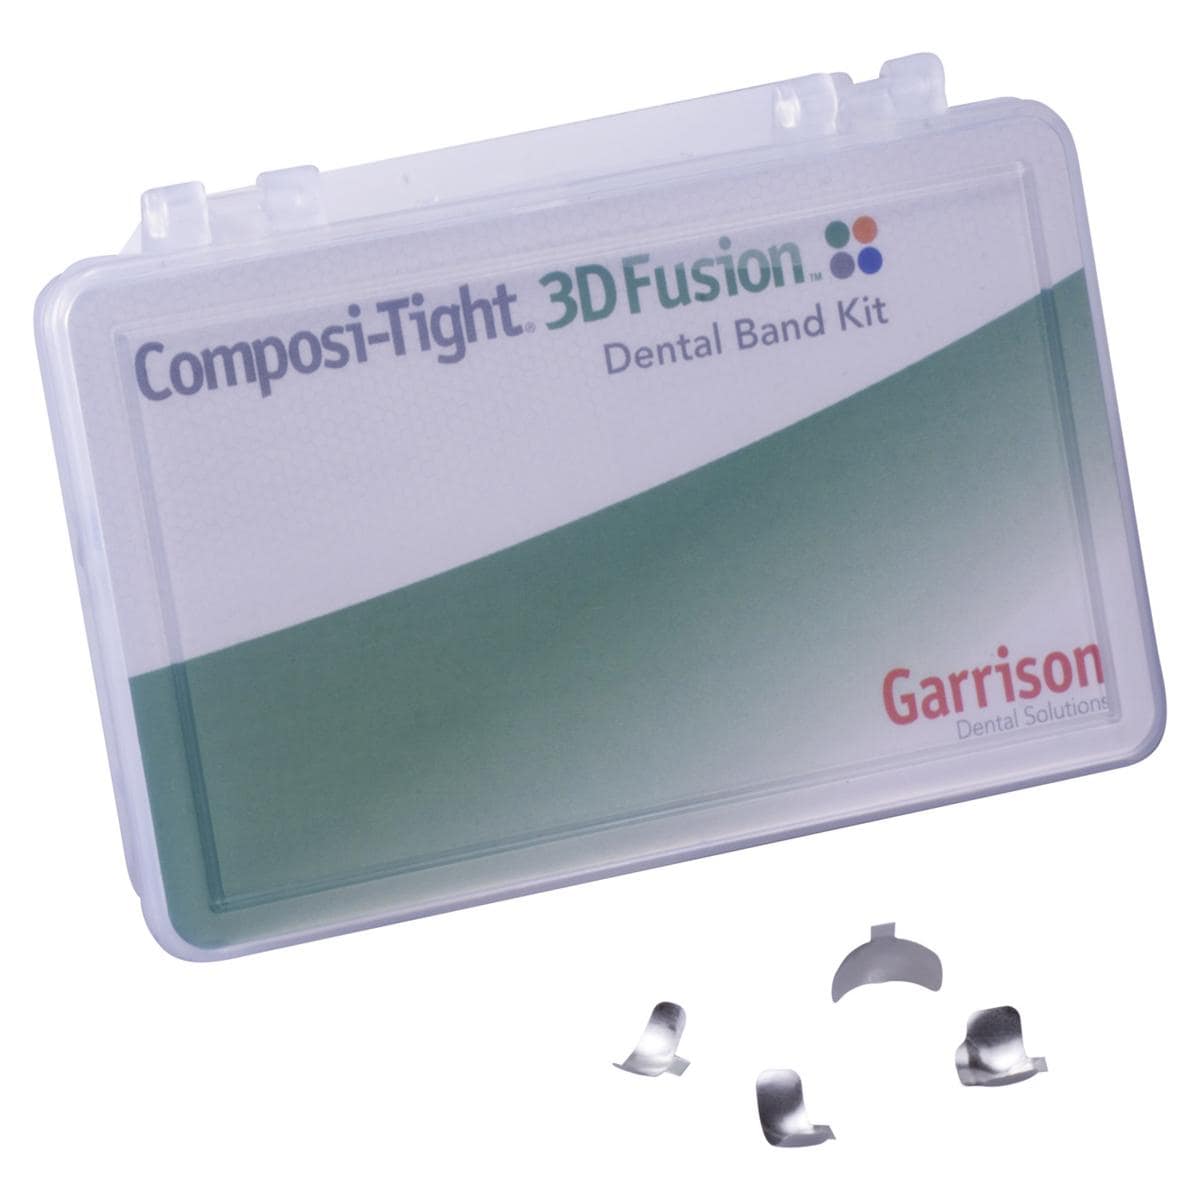 Composi-Tight 3D Fusion Firm matrixen - Mini Kit - FXHB05